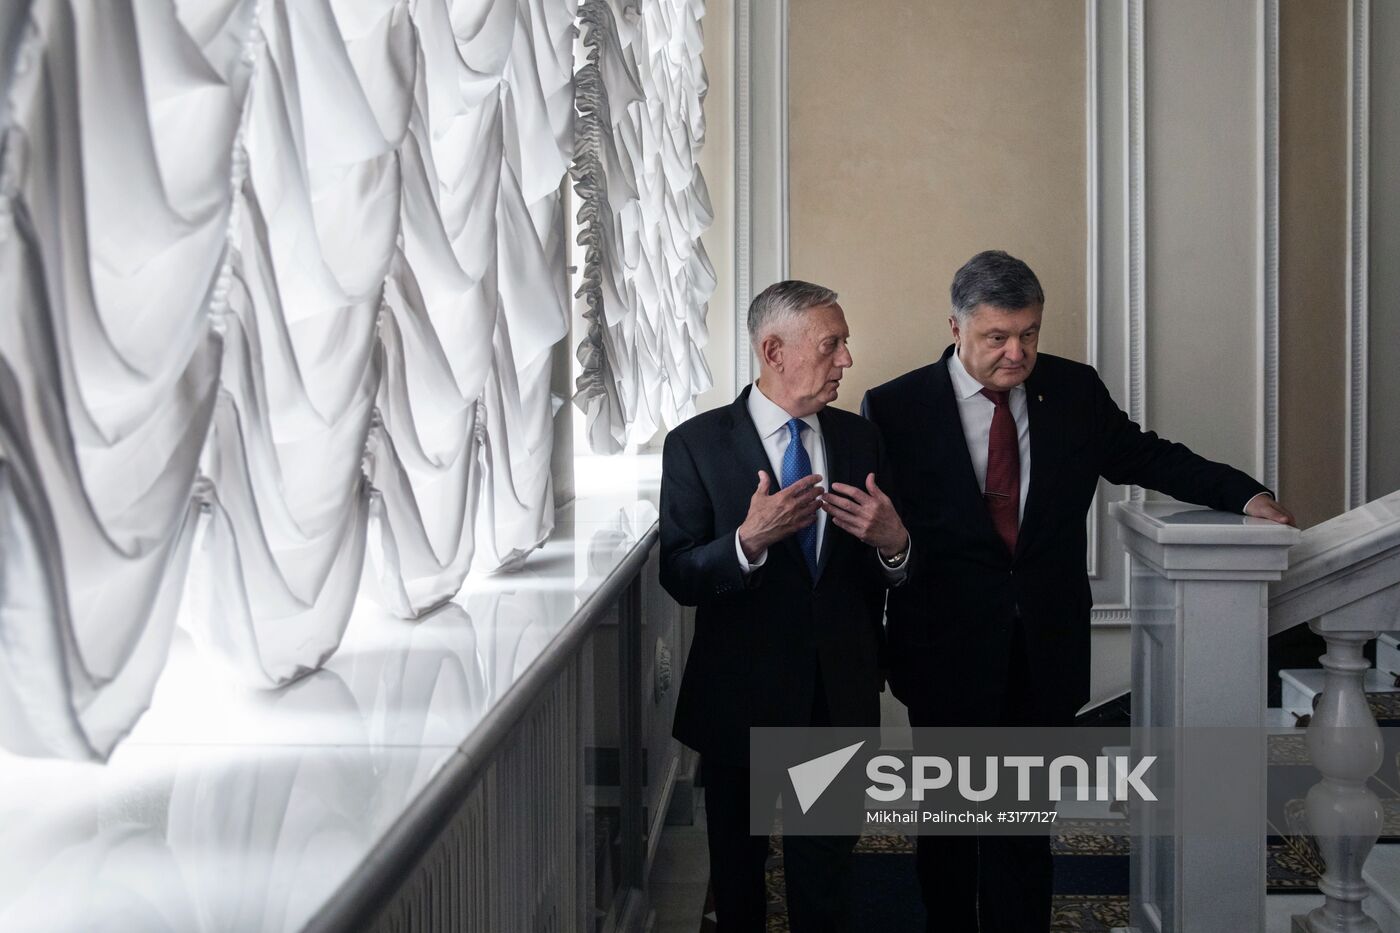 United States Secretary of Defense James Mattis visits Ukraine